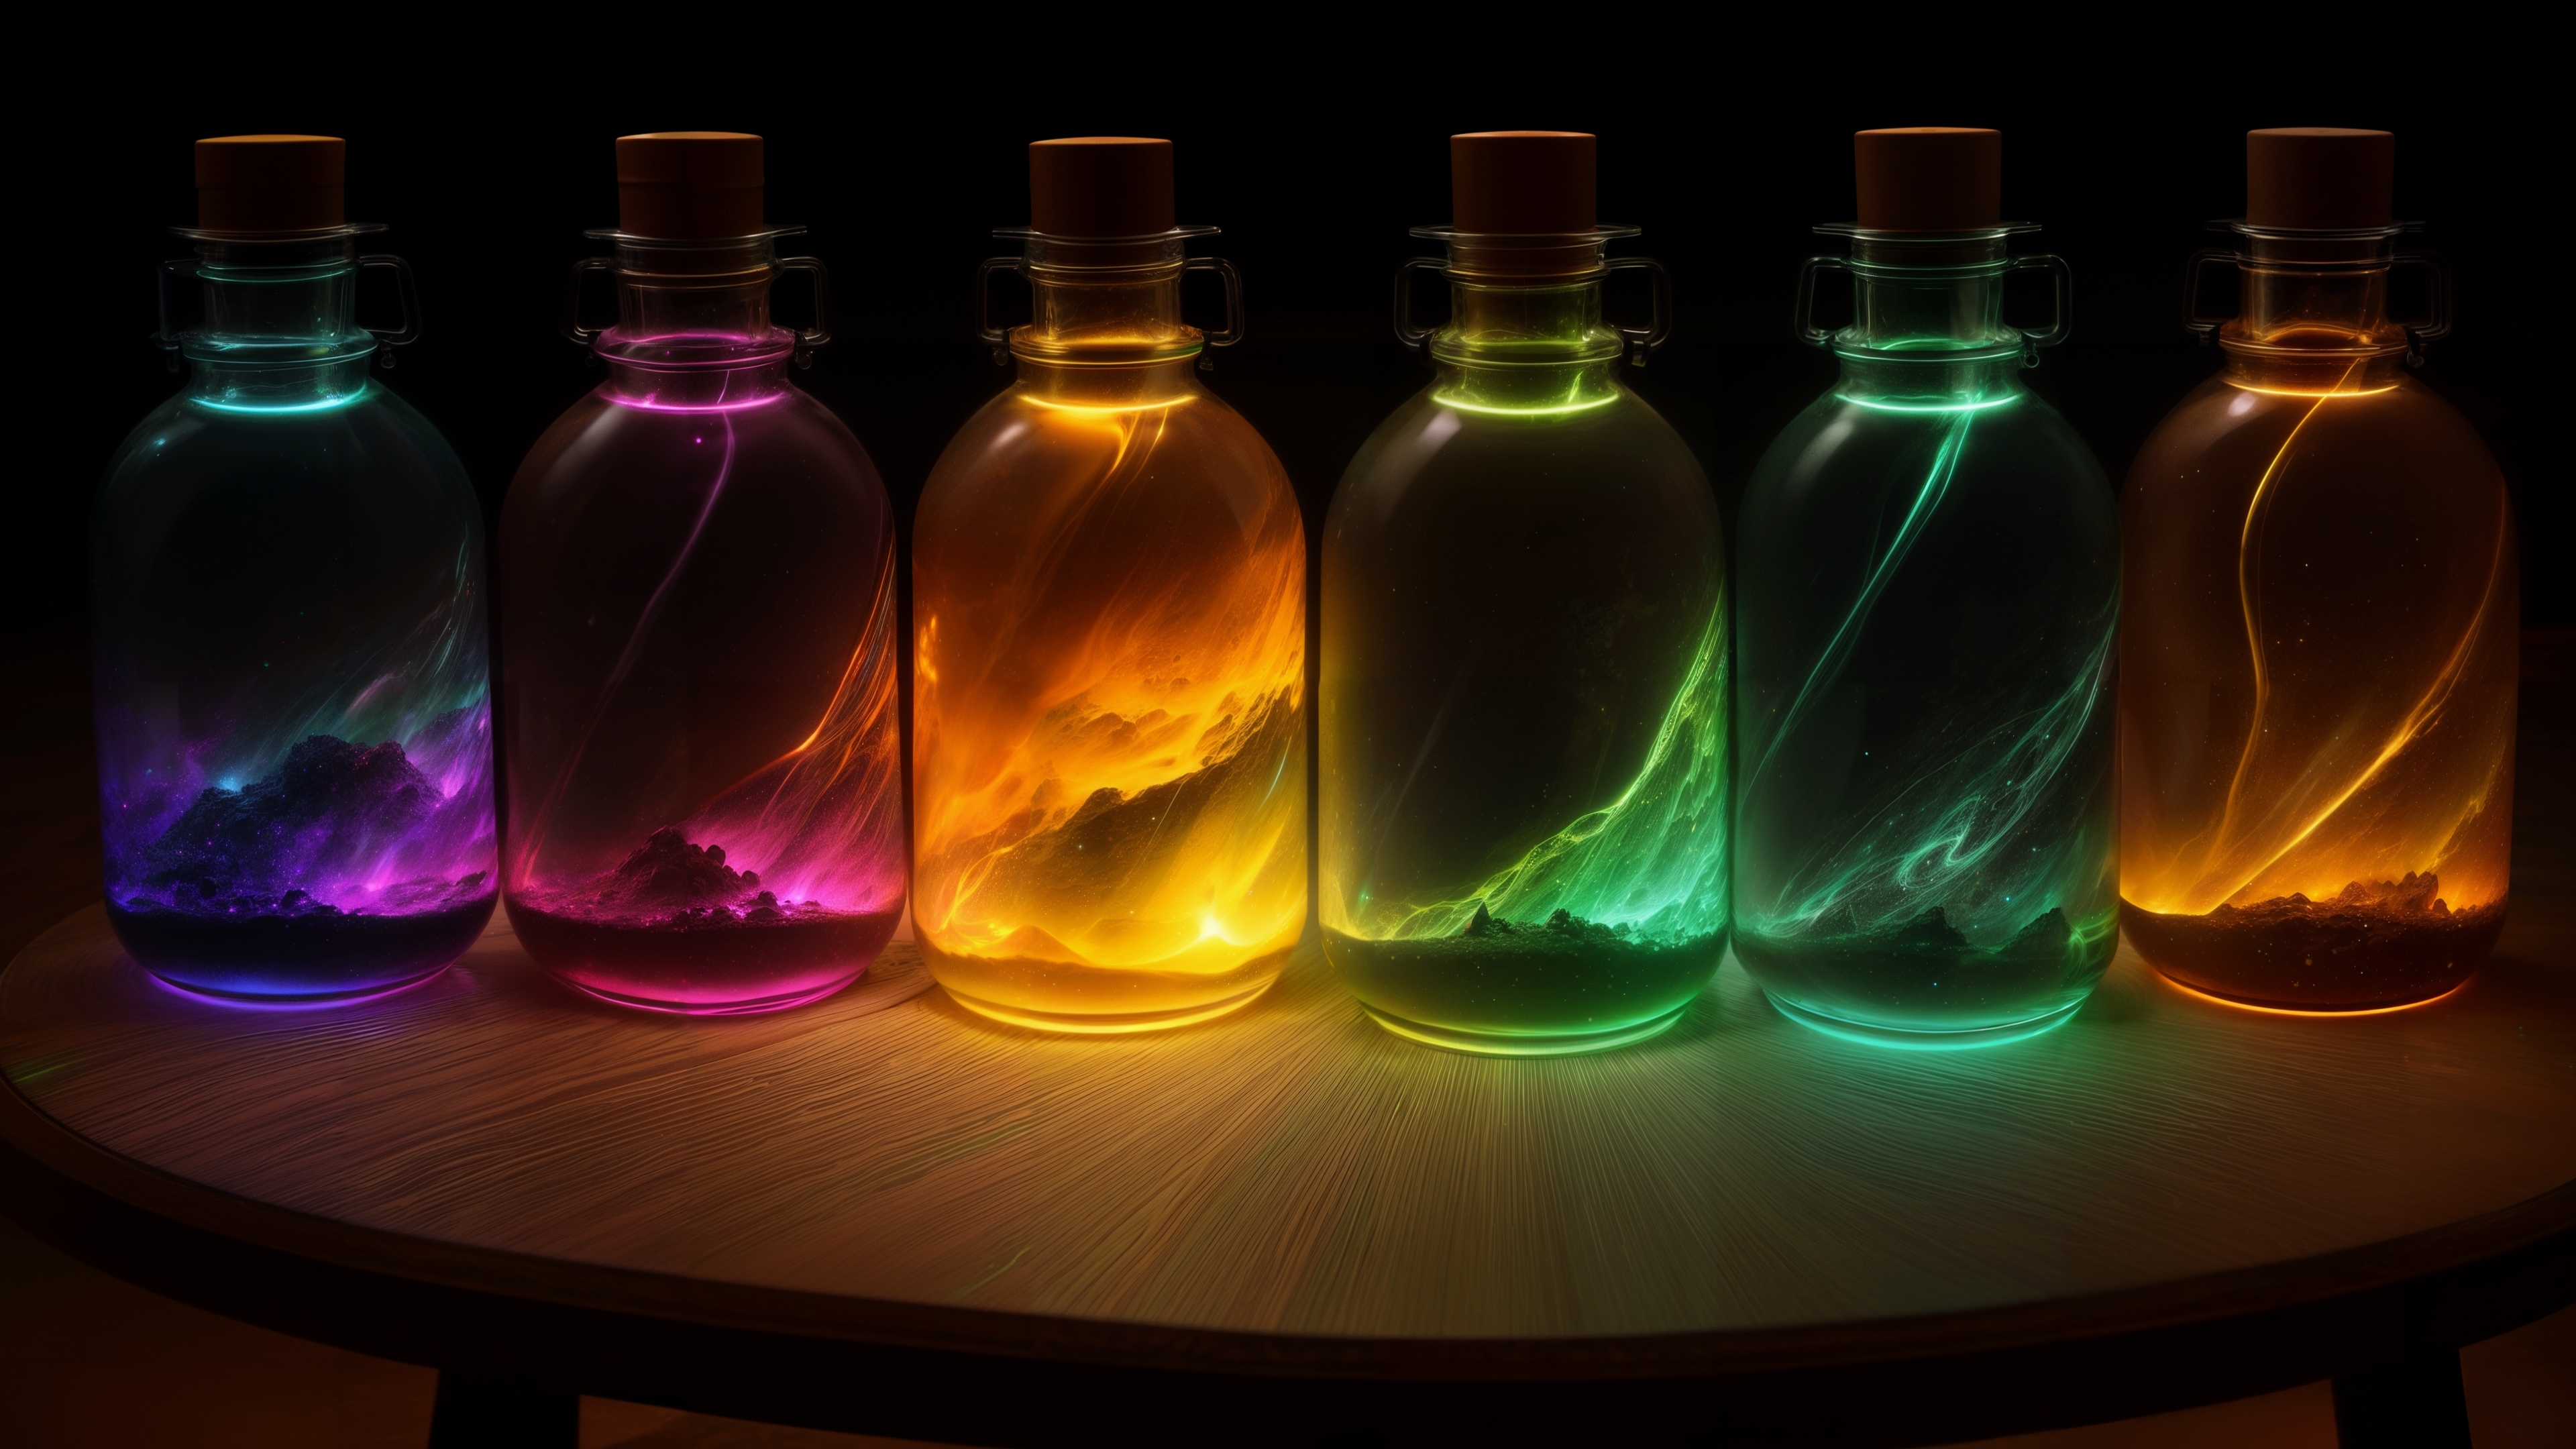 The magic bottles glow in the dark